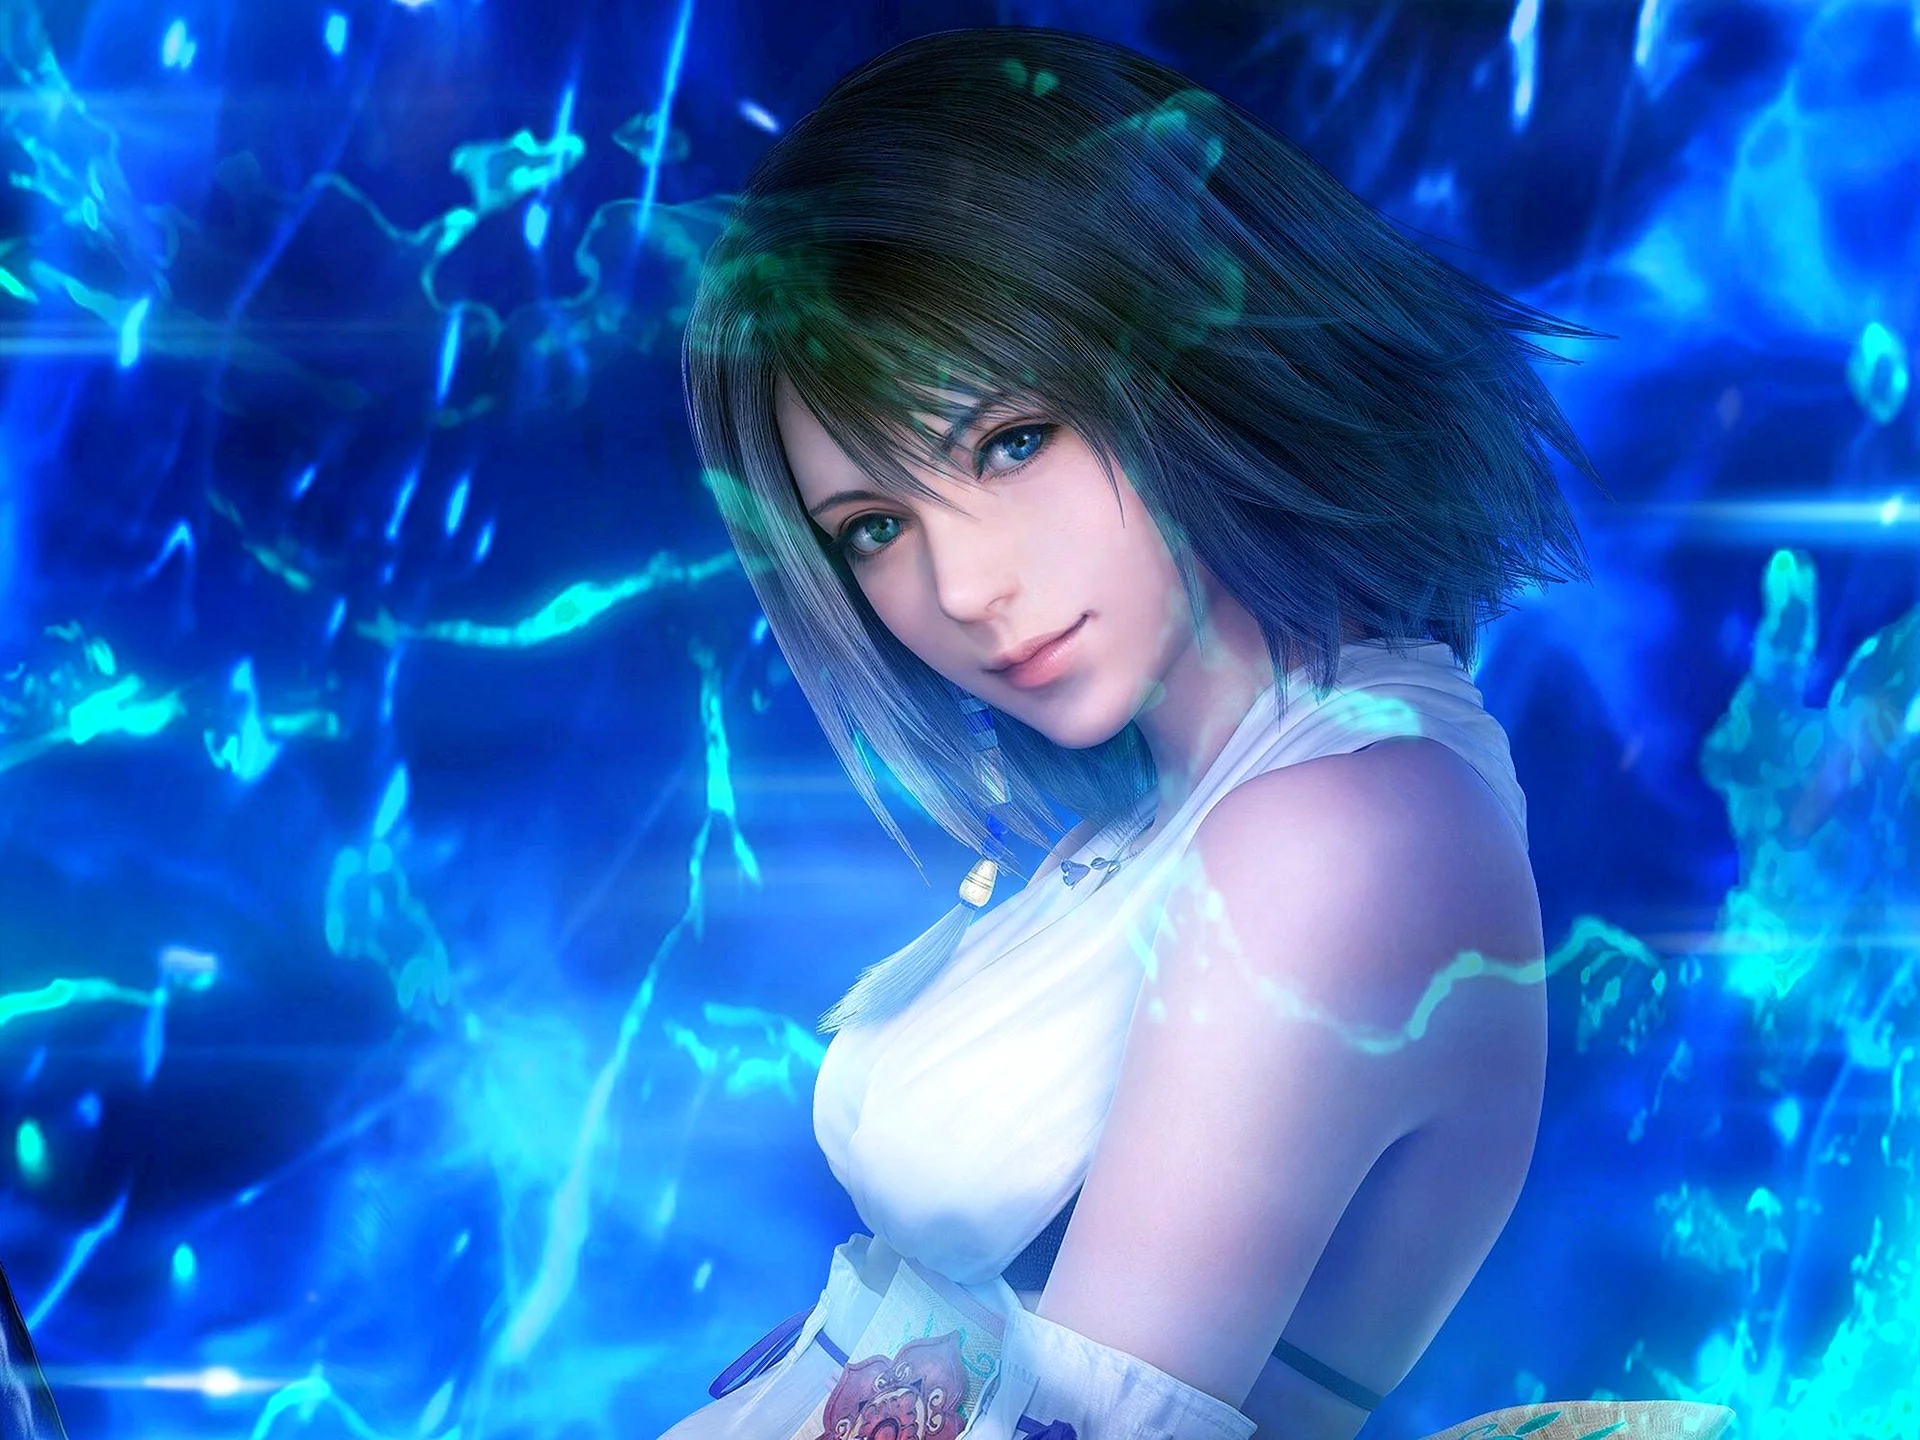 Final Fantasy X-2 Yuna Wallpaper